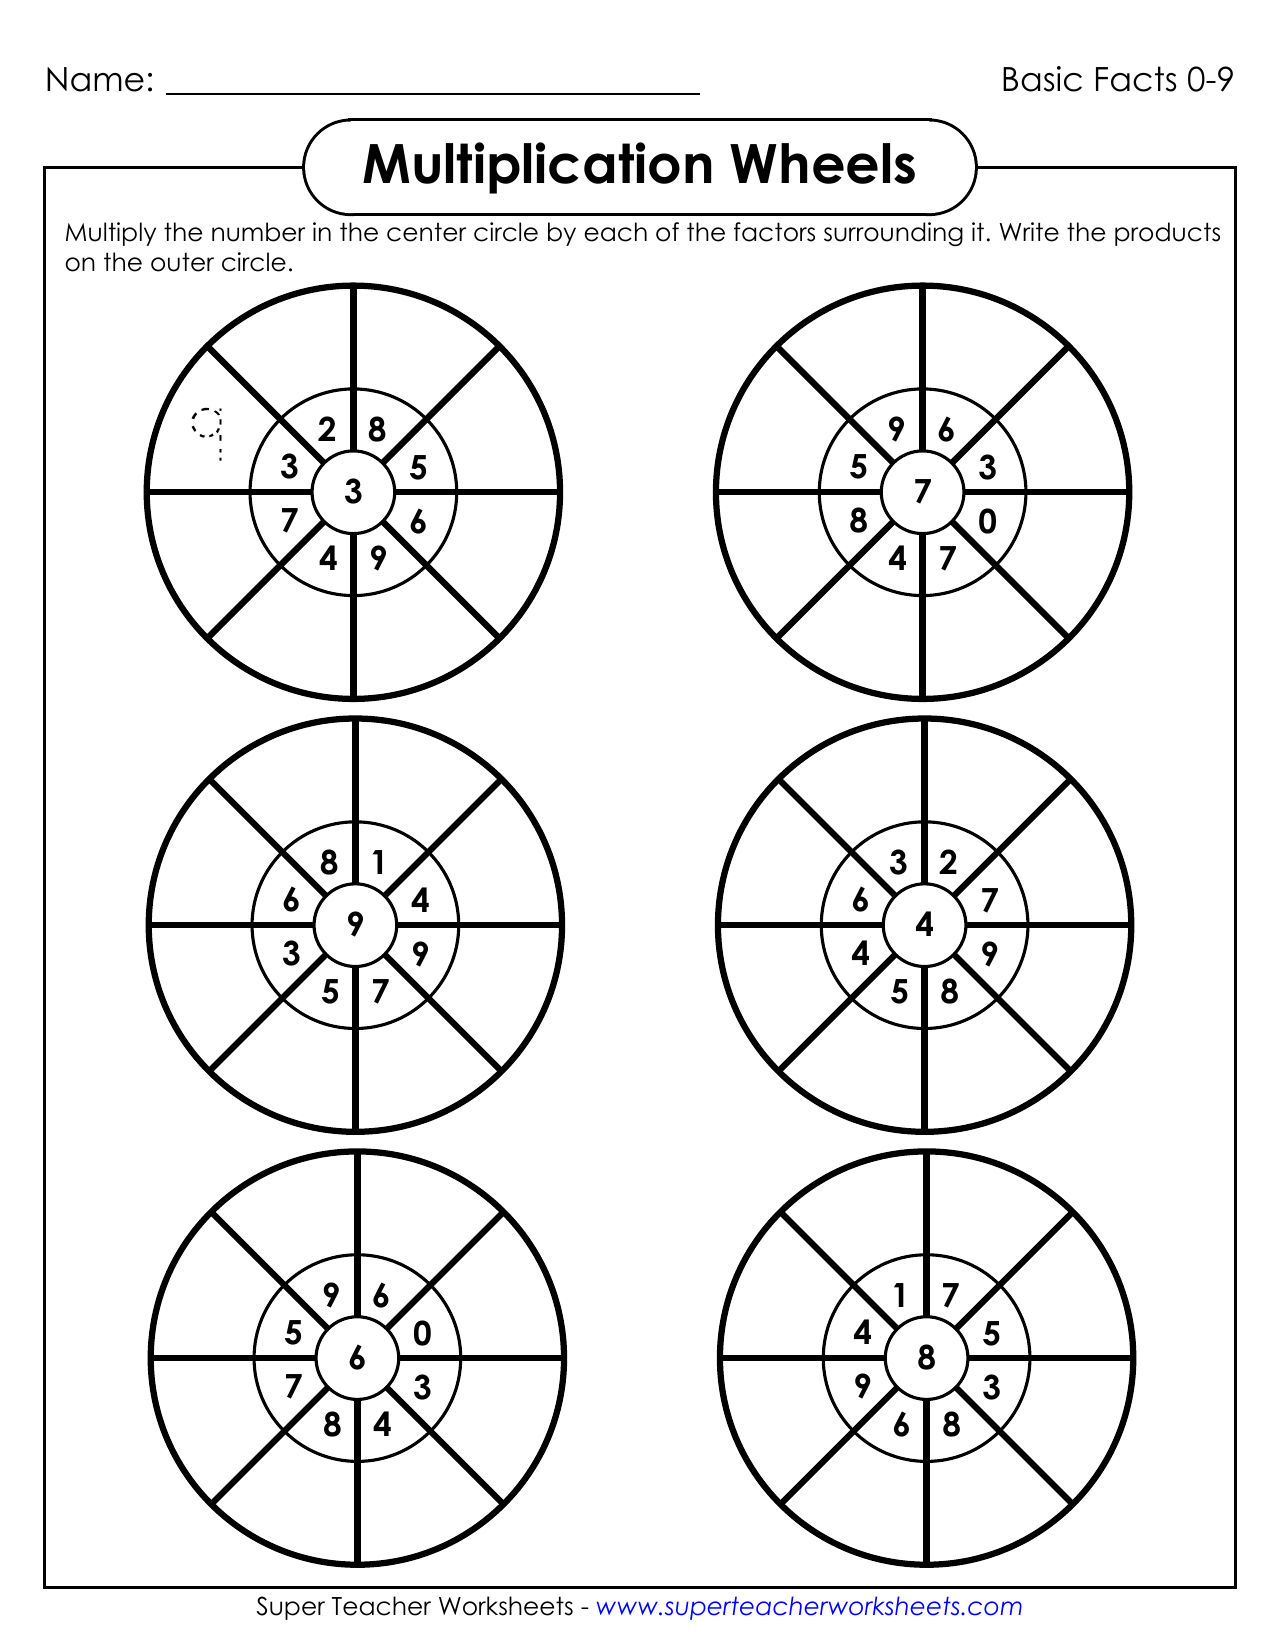 Printable Multiplication Wheels PrintableMultiplication